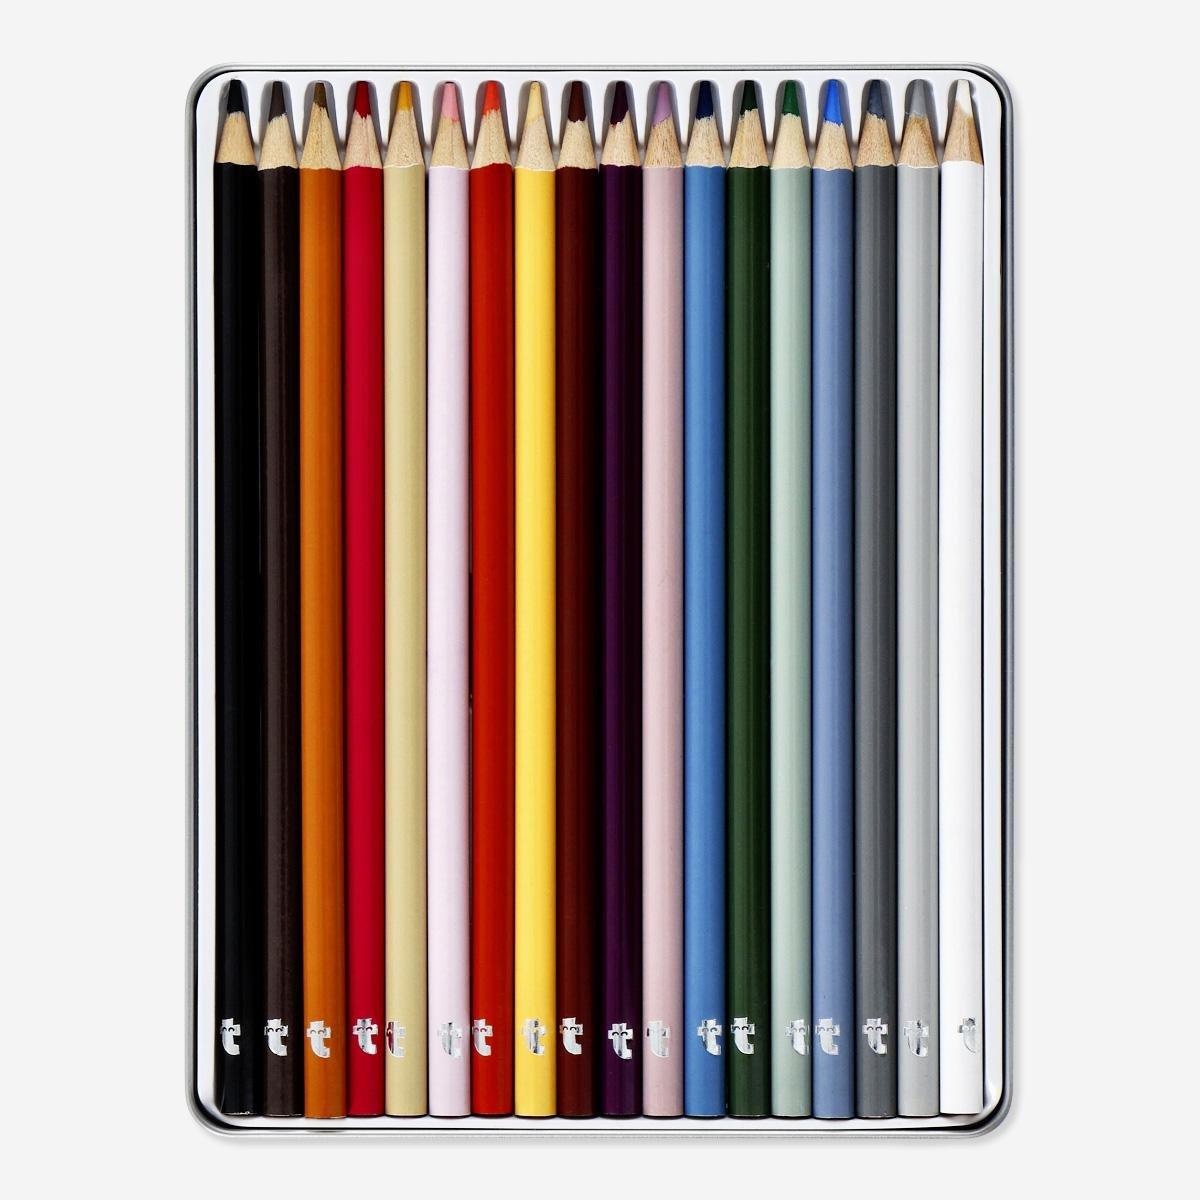 Multicolour watercolouring pencils. 18 pcs